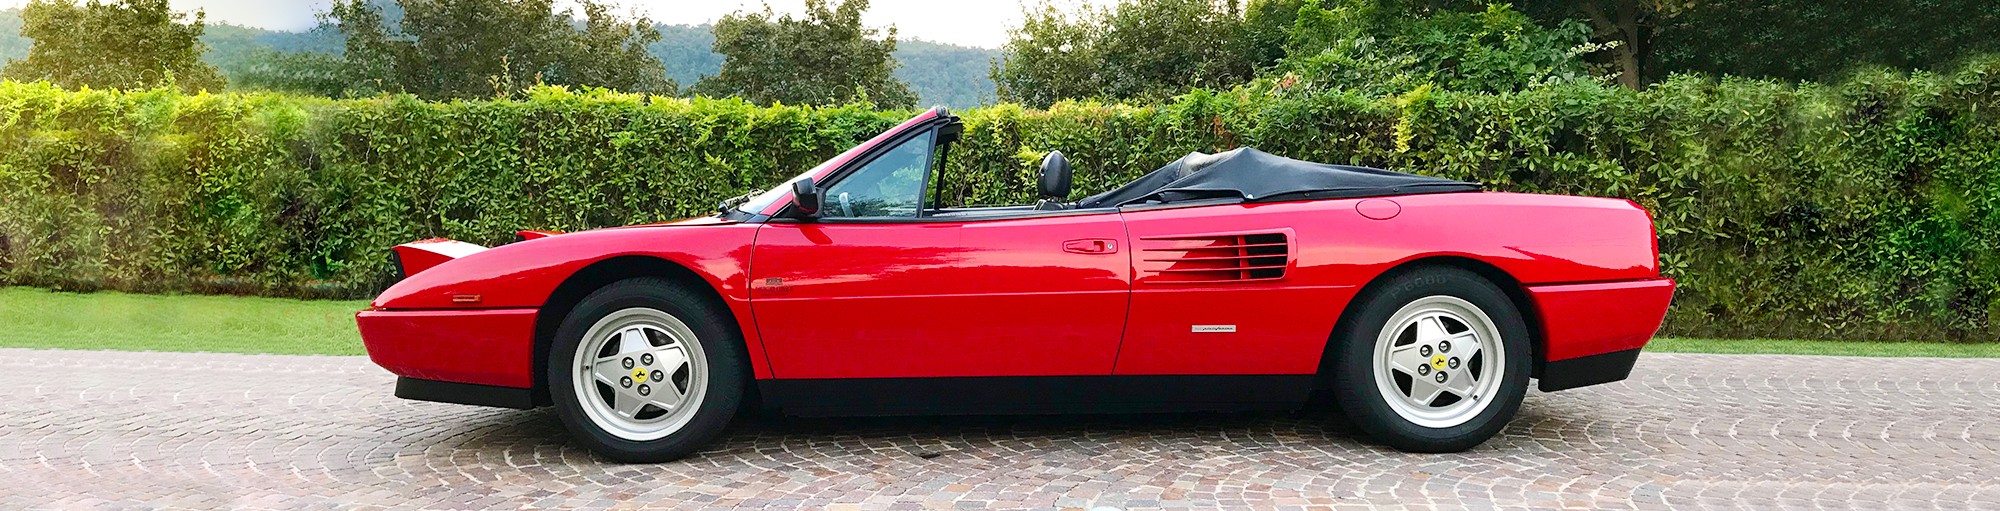 Ferrari Mondial T Cabriolet in vendita - Passione Classica